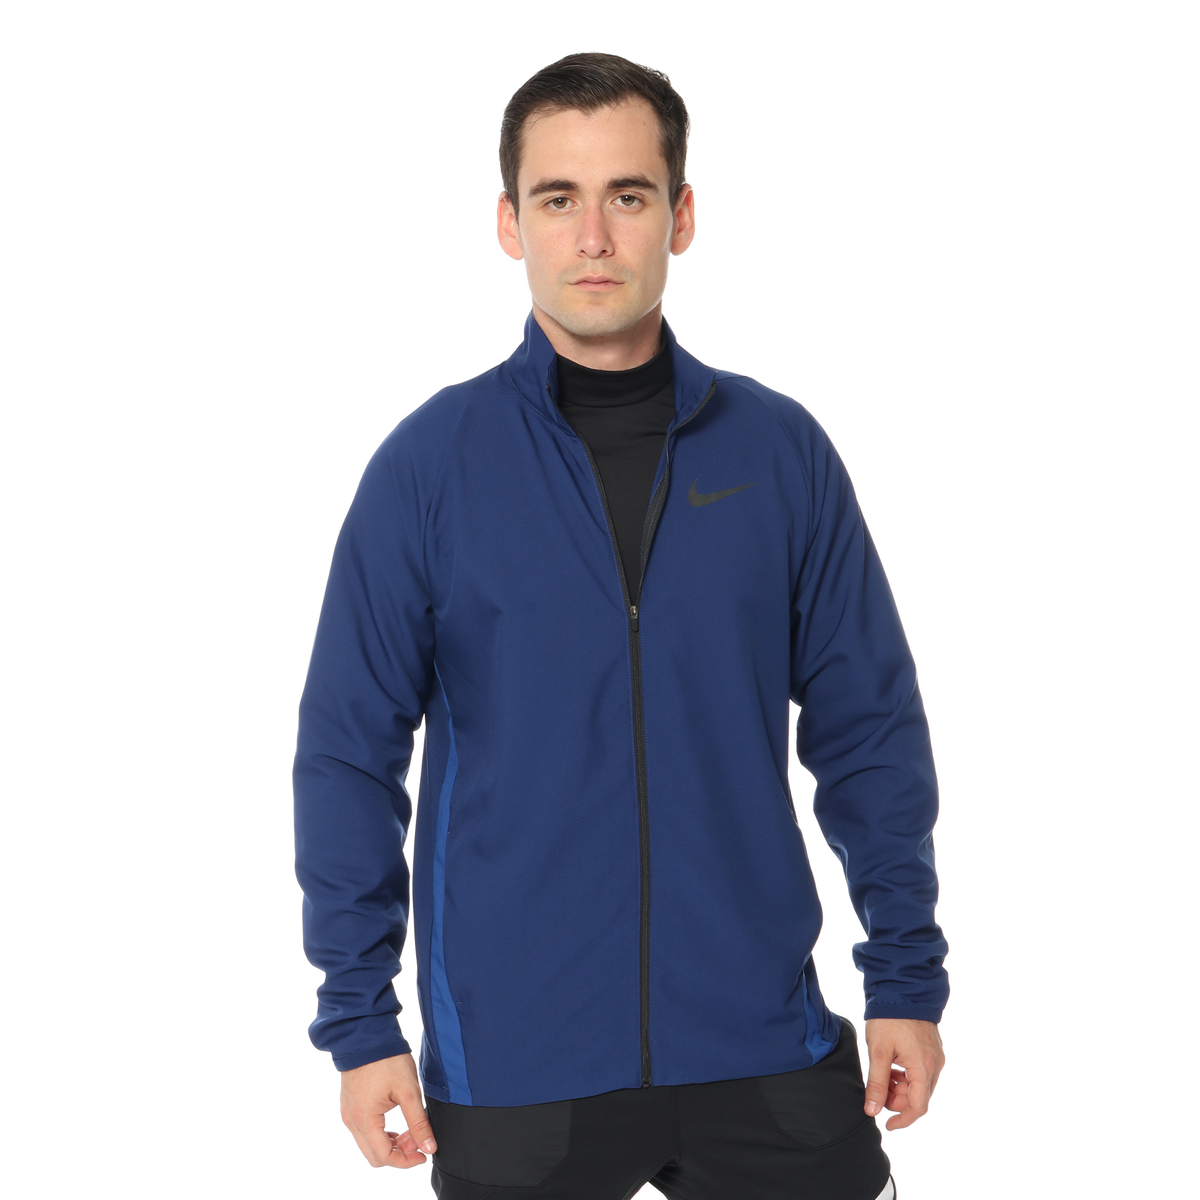 Nike DRY TEAM Woven Men's Training Jacket (Blue) Size 2XL - image 1 of 2